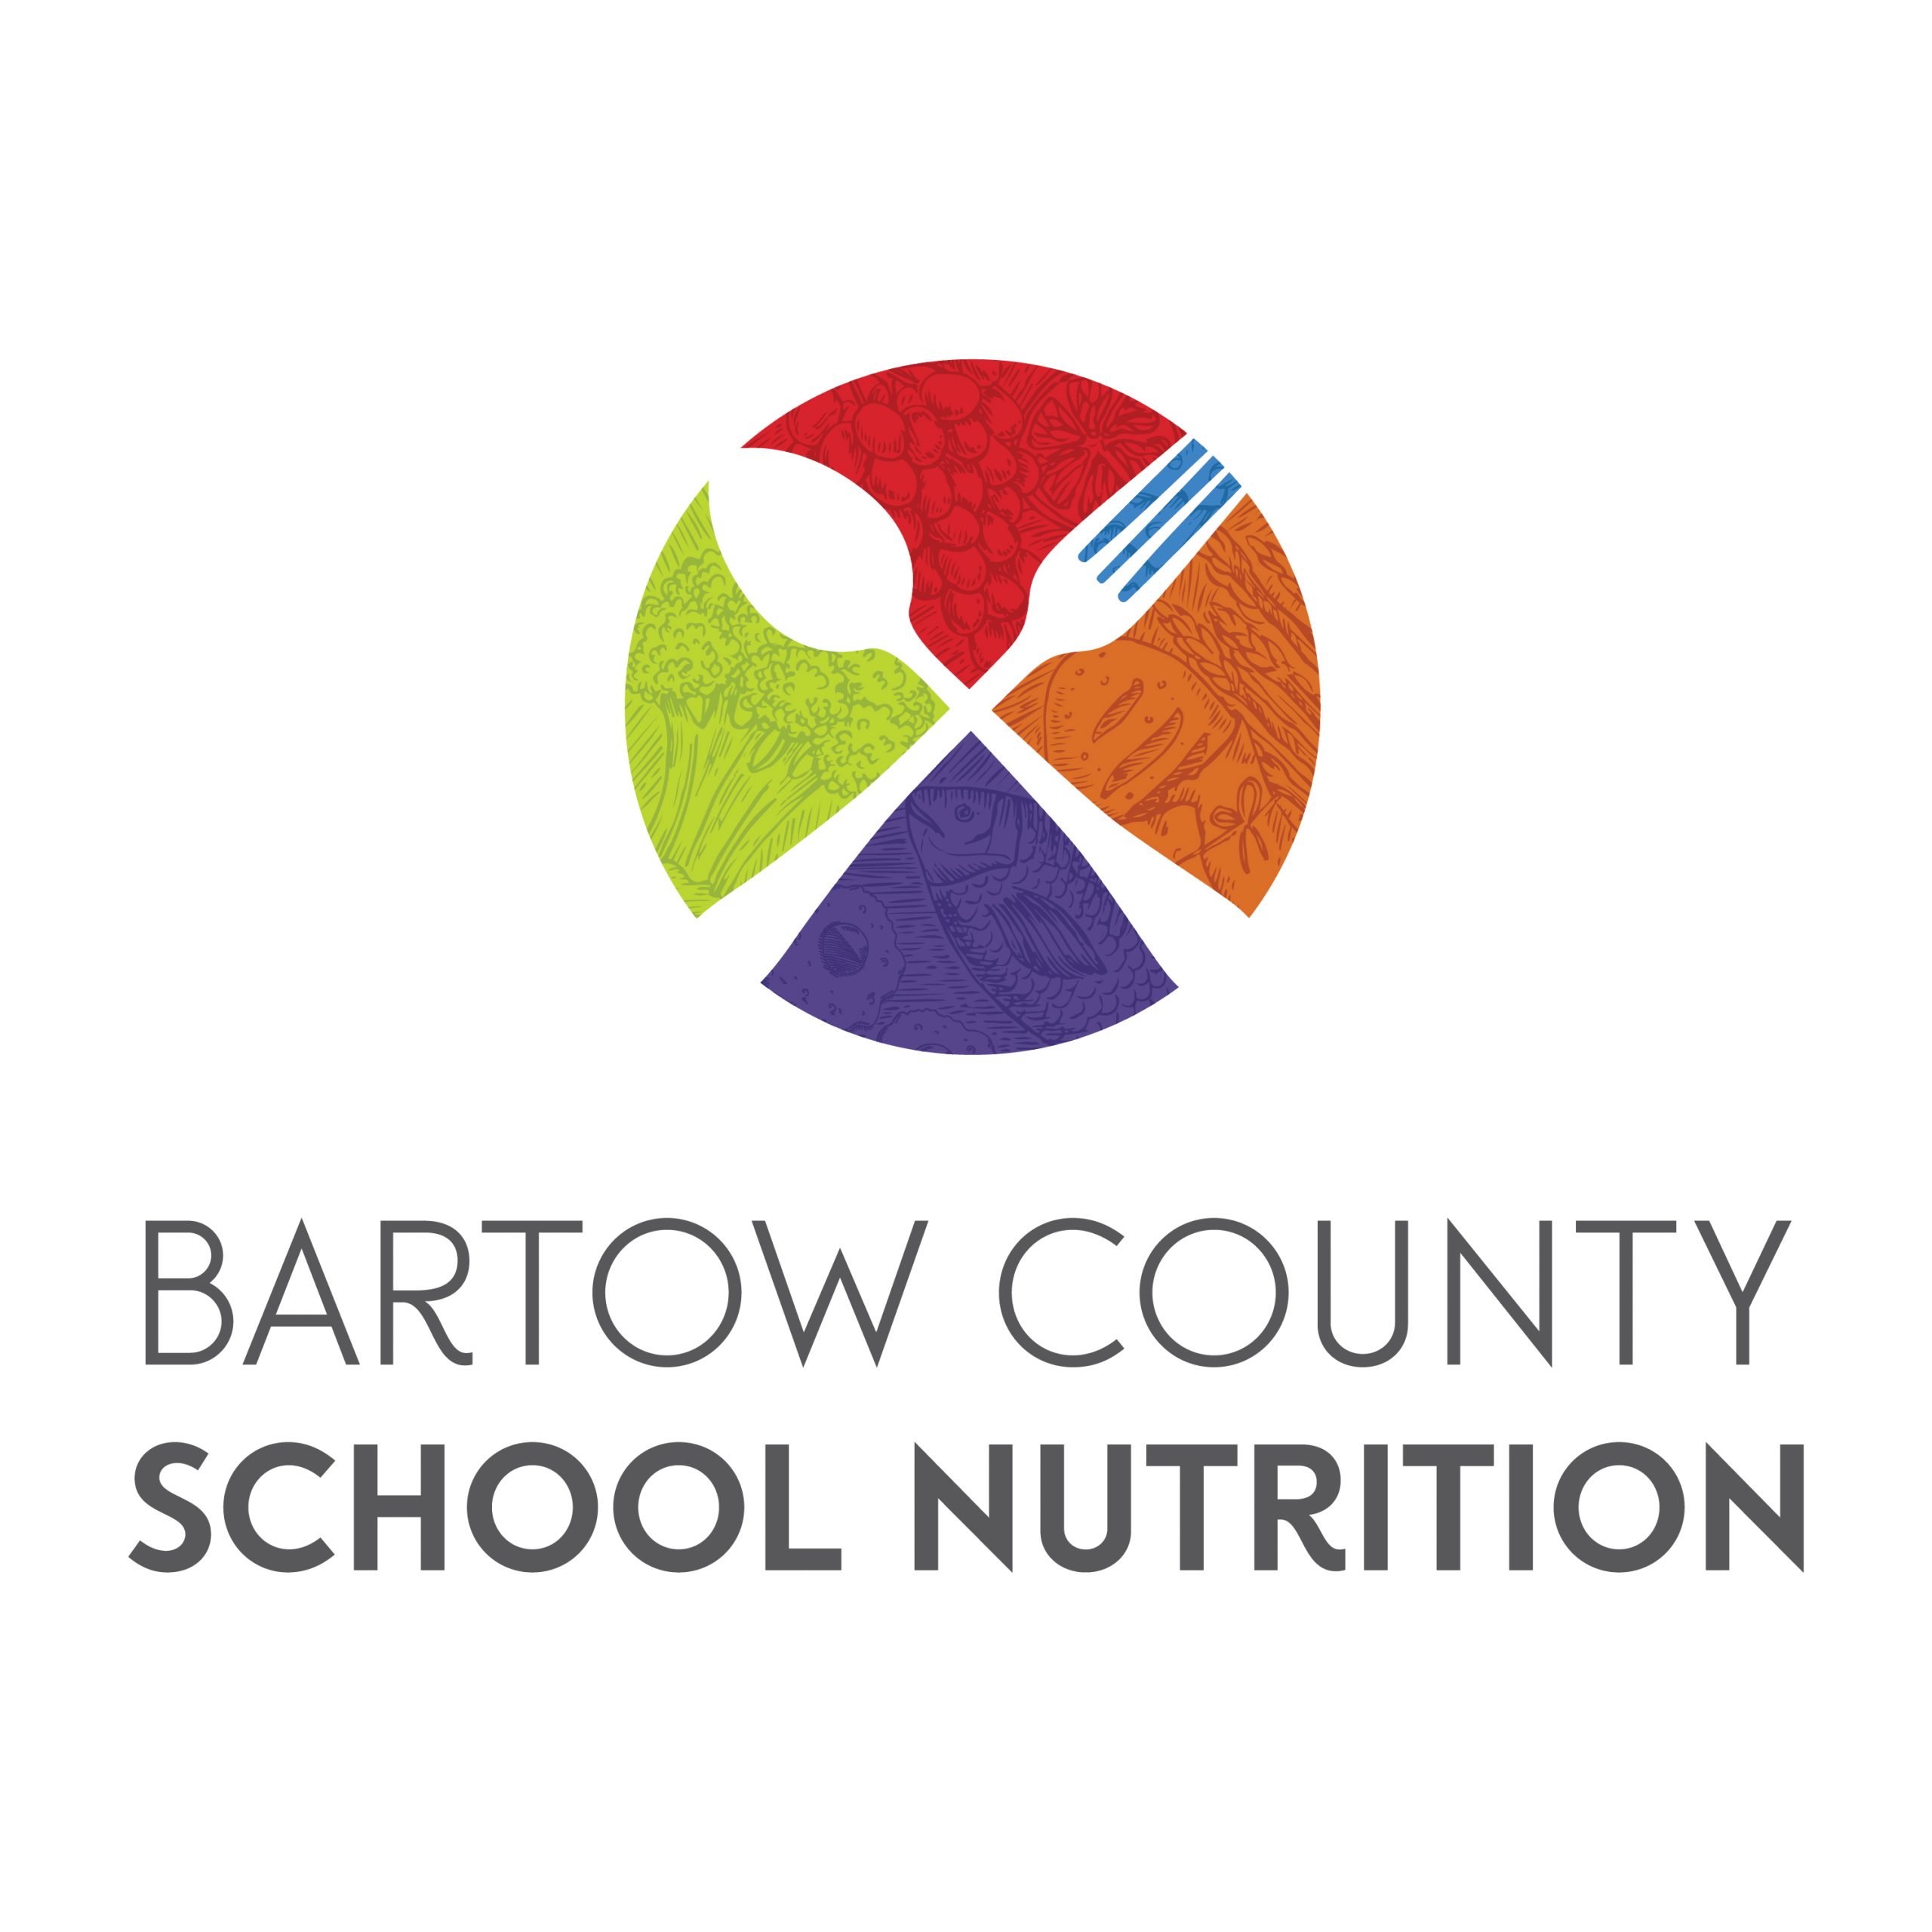 Bartow County School Nutrition Logo Design